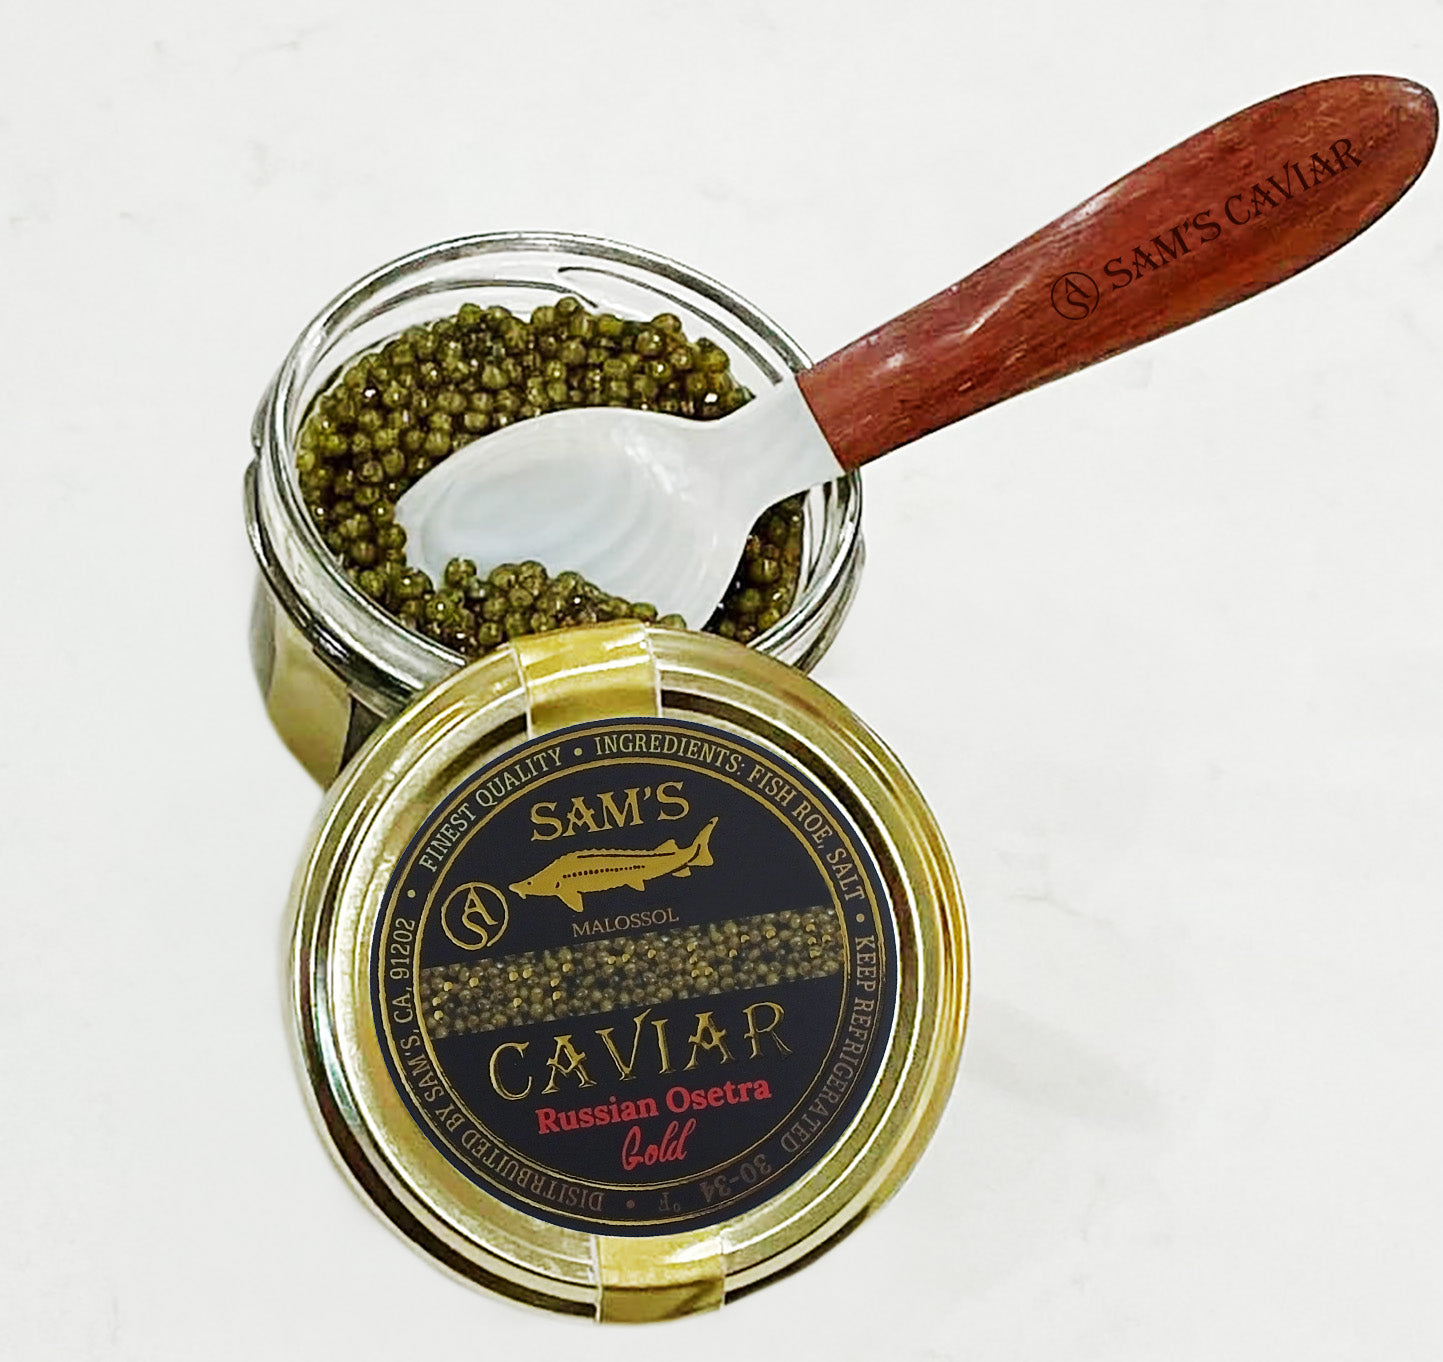 Caviar_Russian_Osetra_Gold